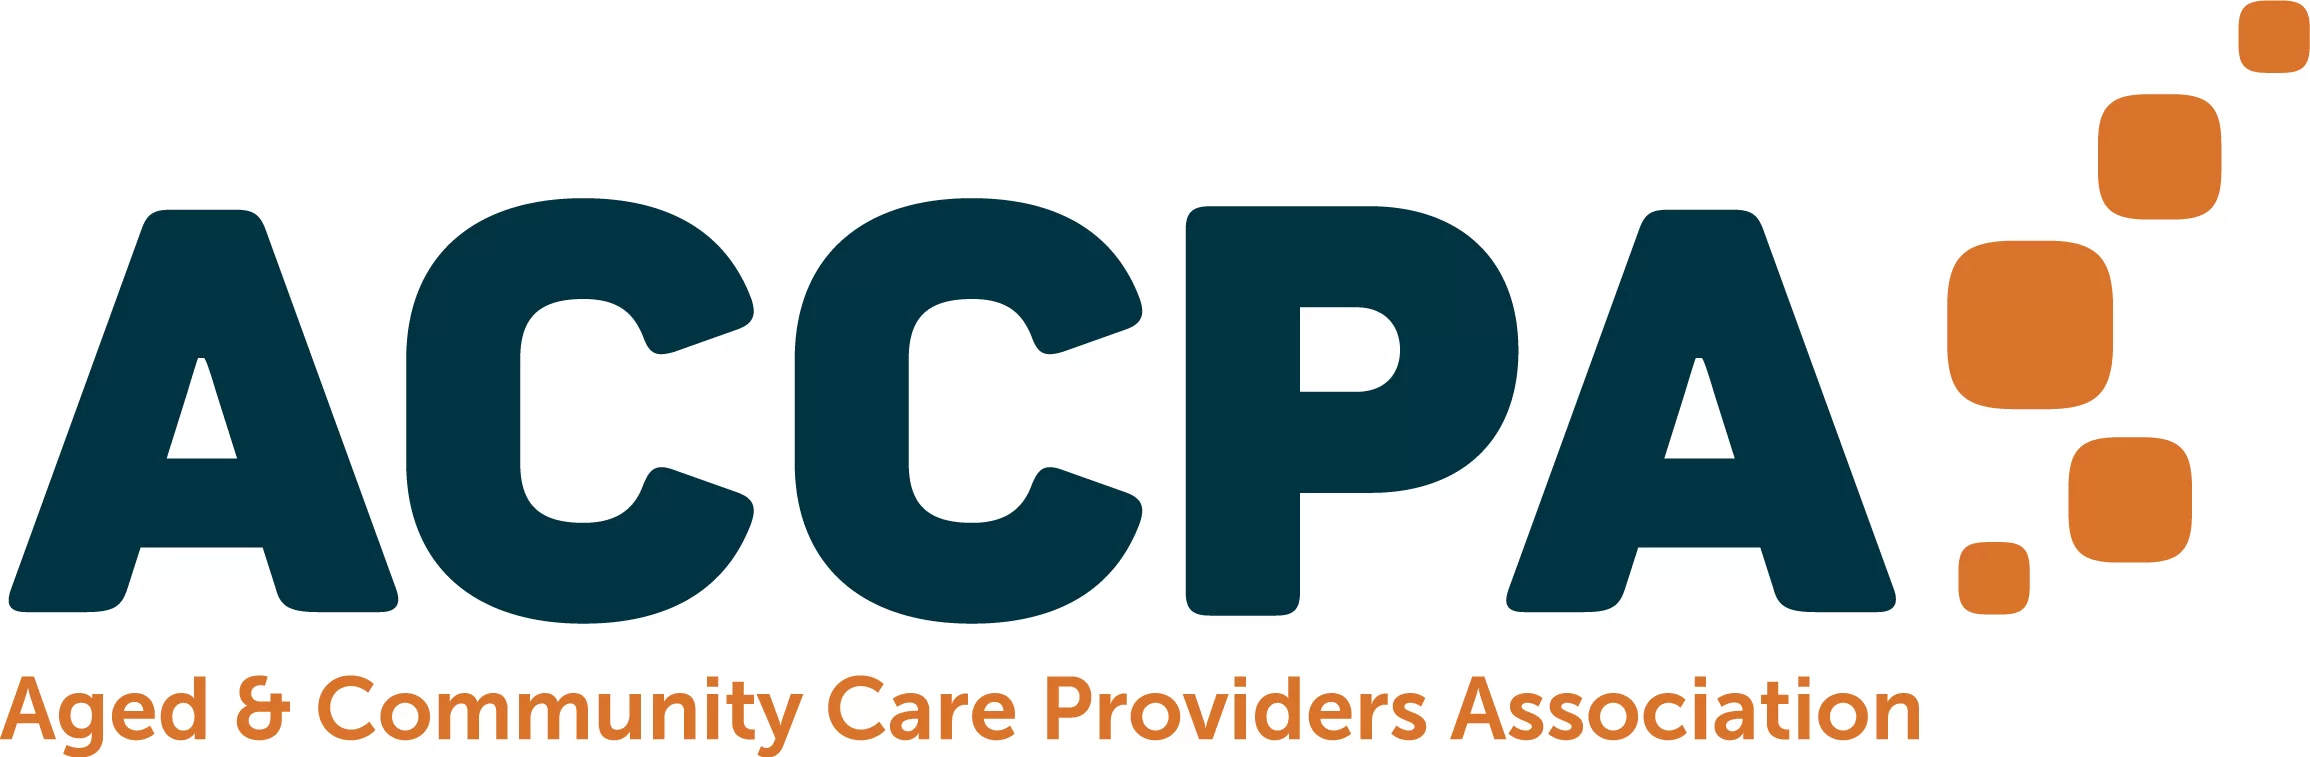 ACCPA-Logo_Primary